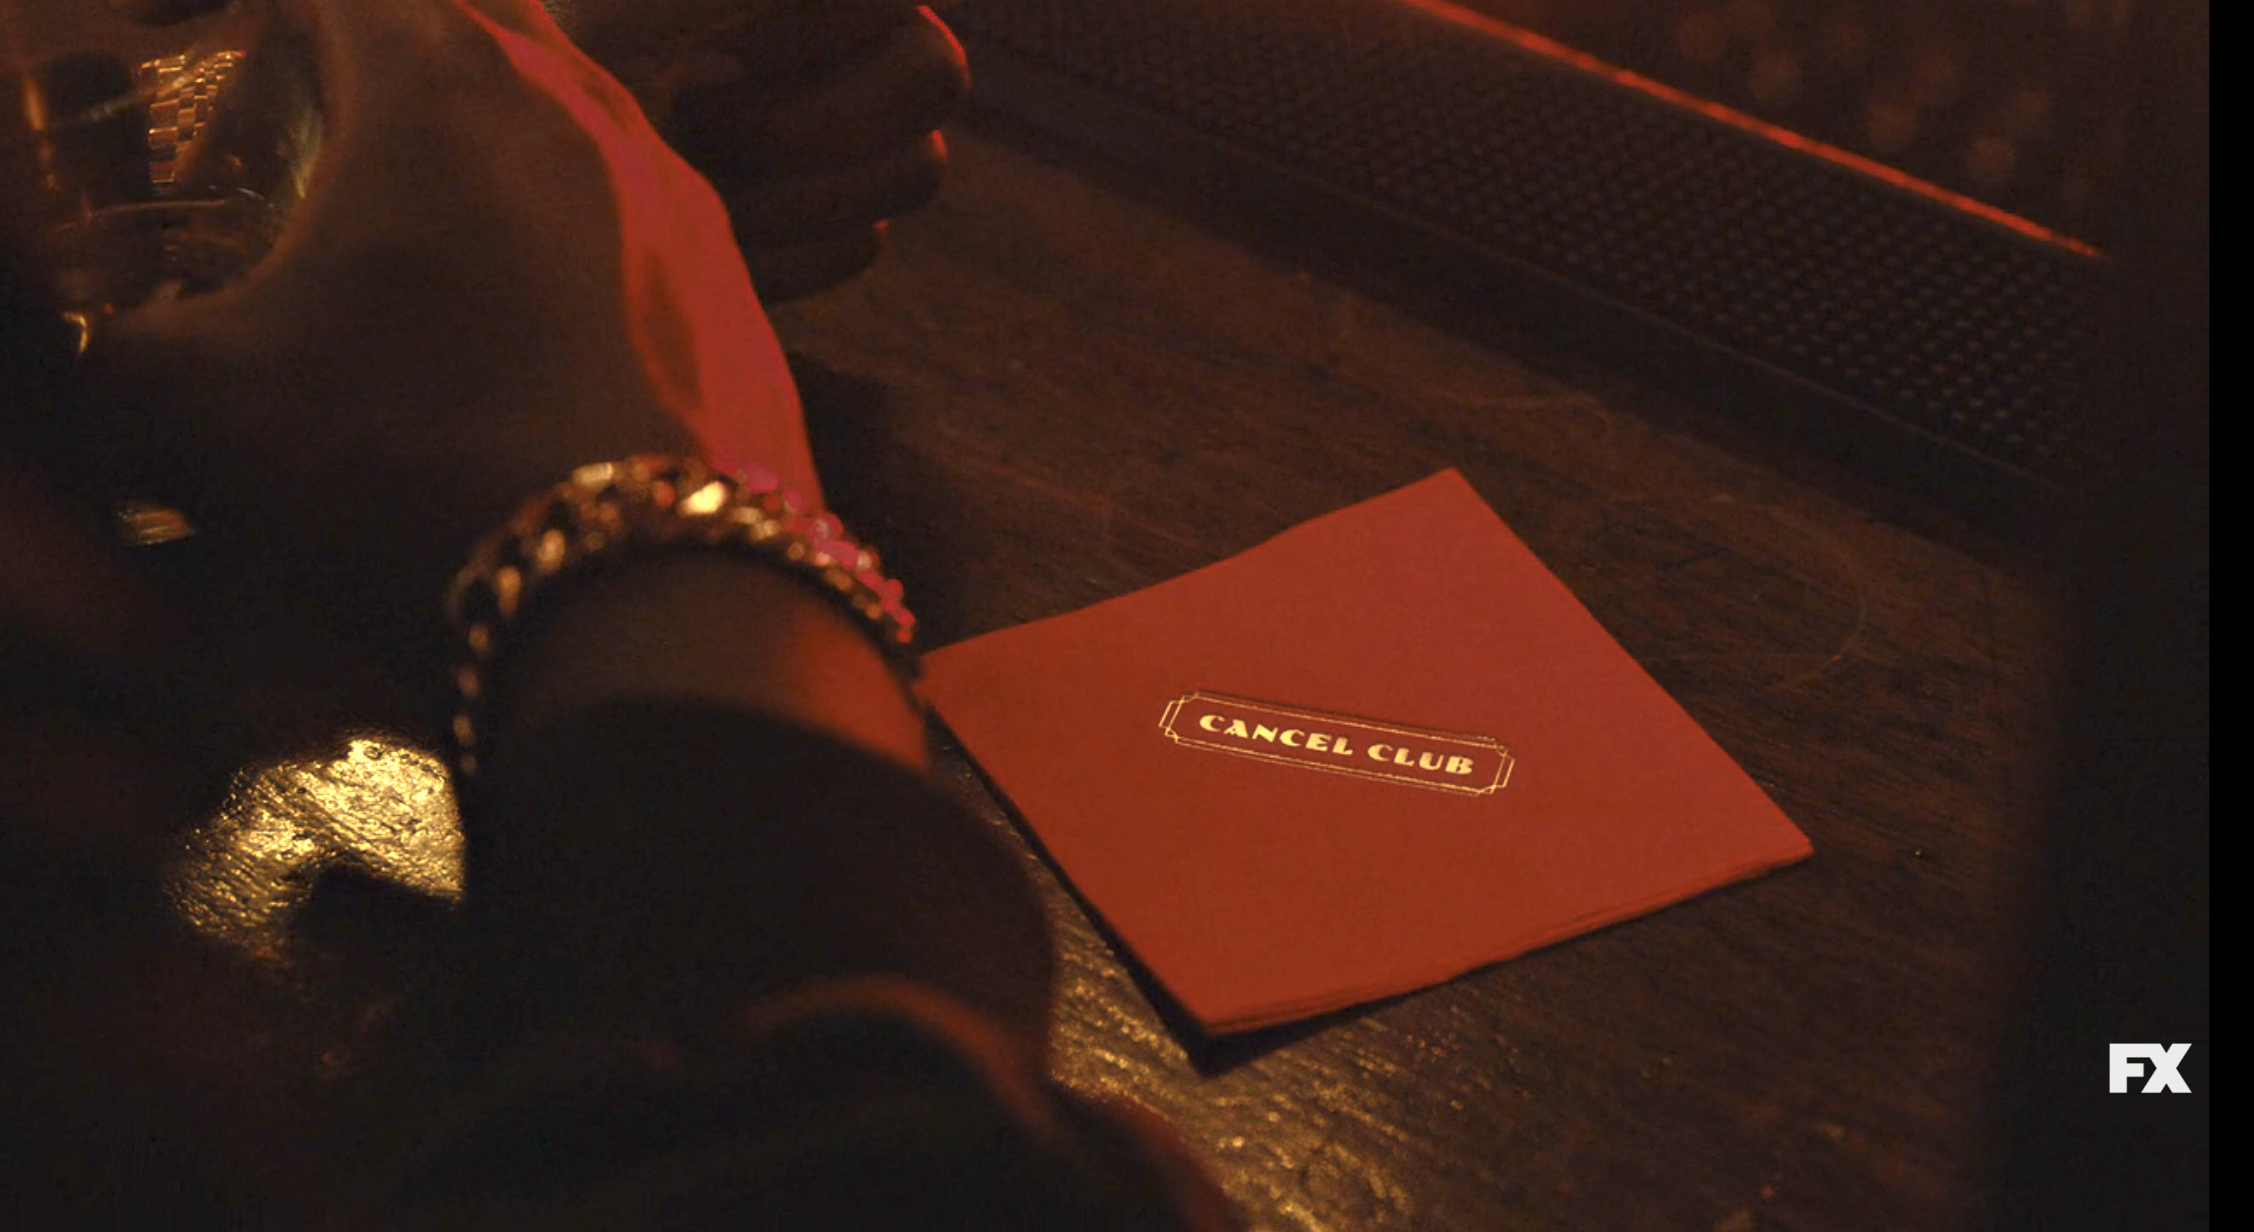 A napkin on the bar with a logo saying Cancel Club